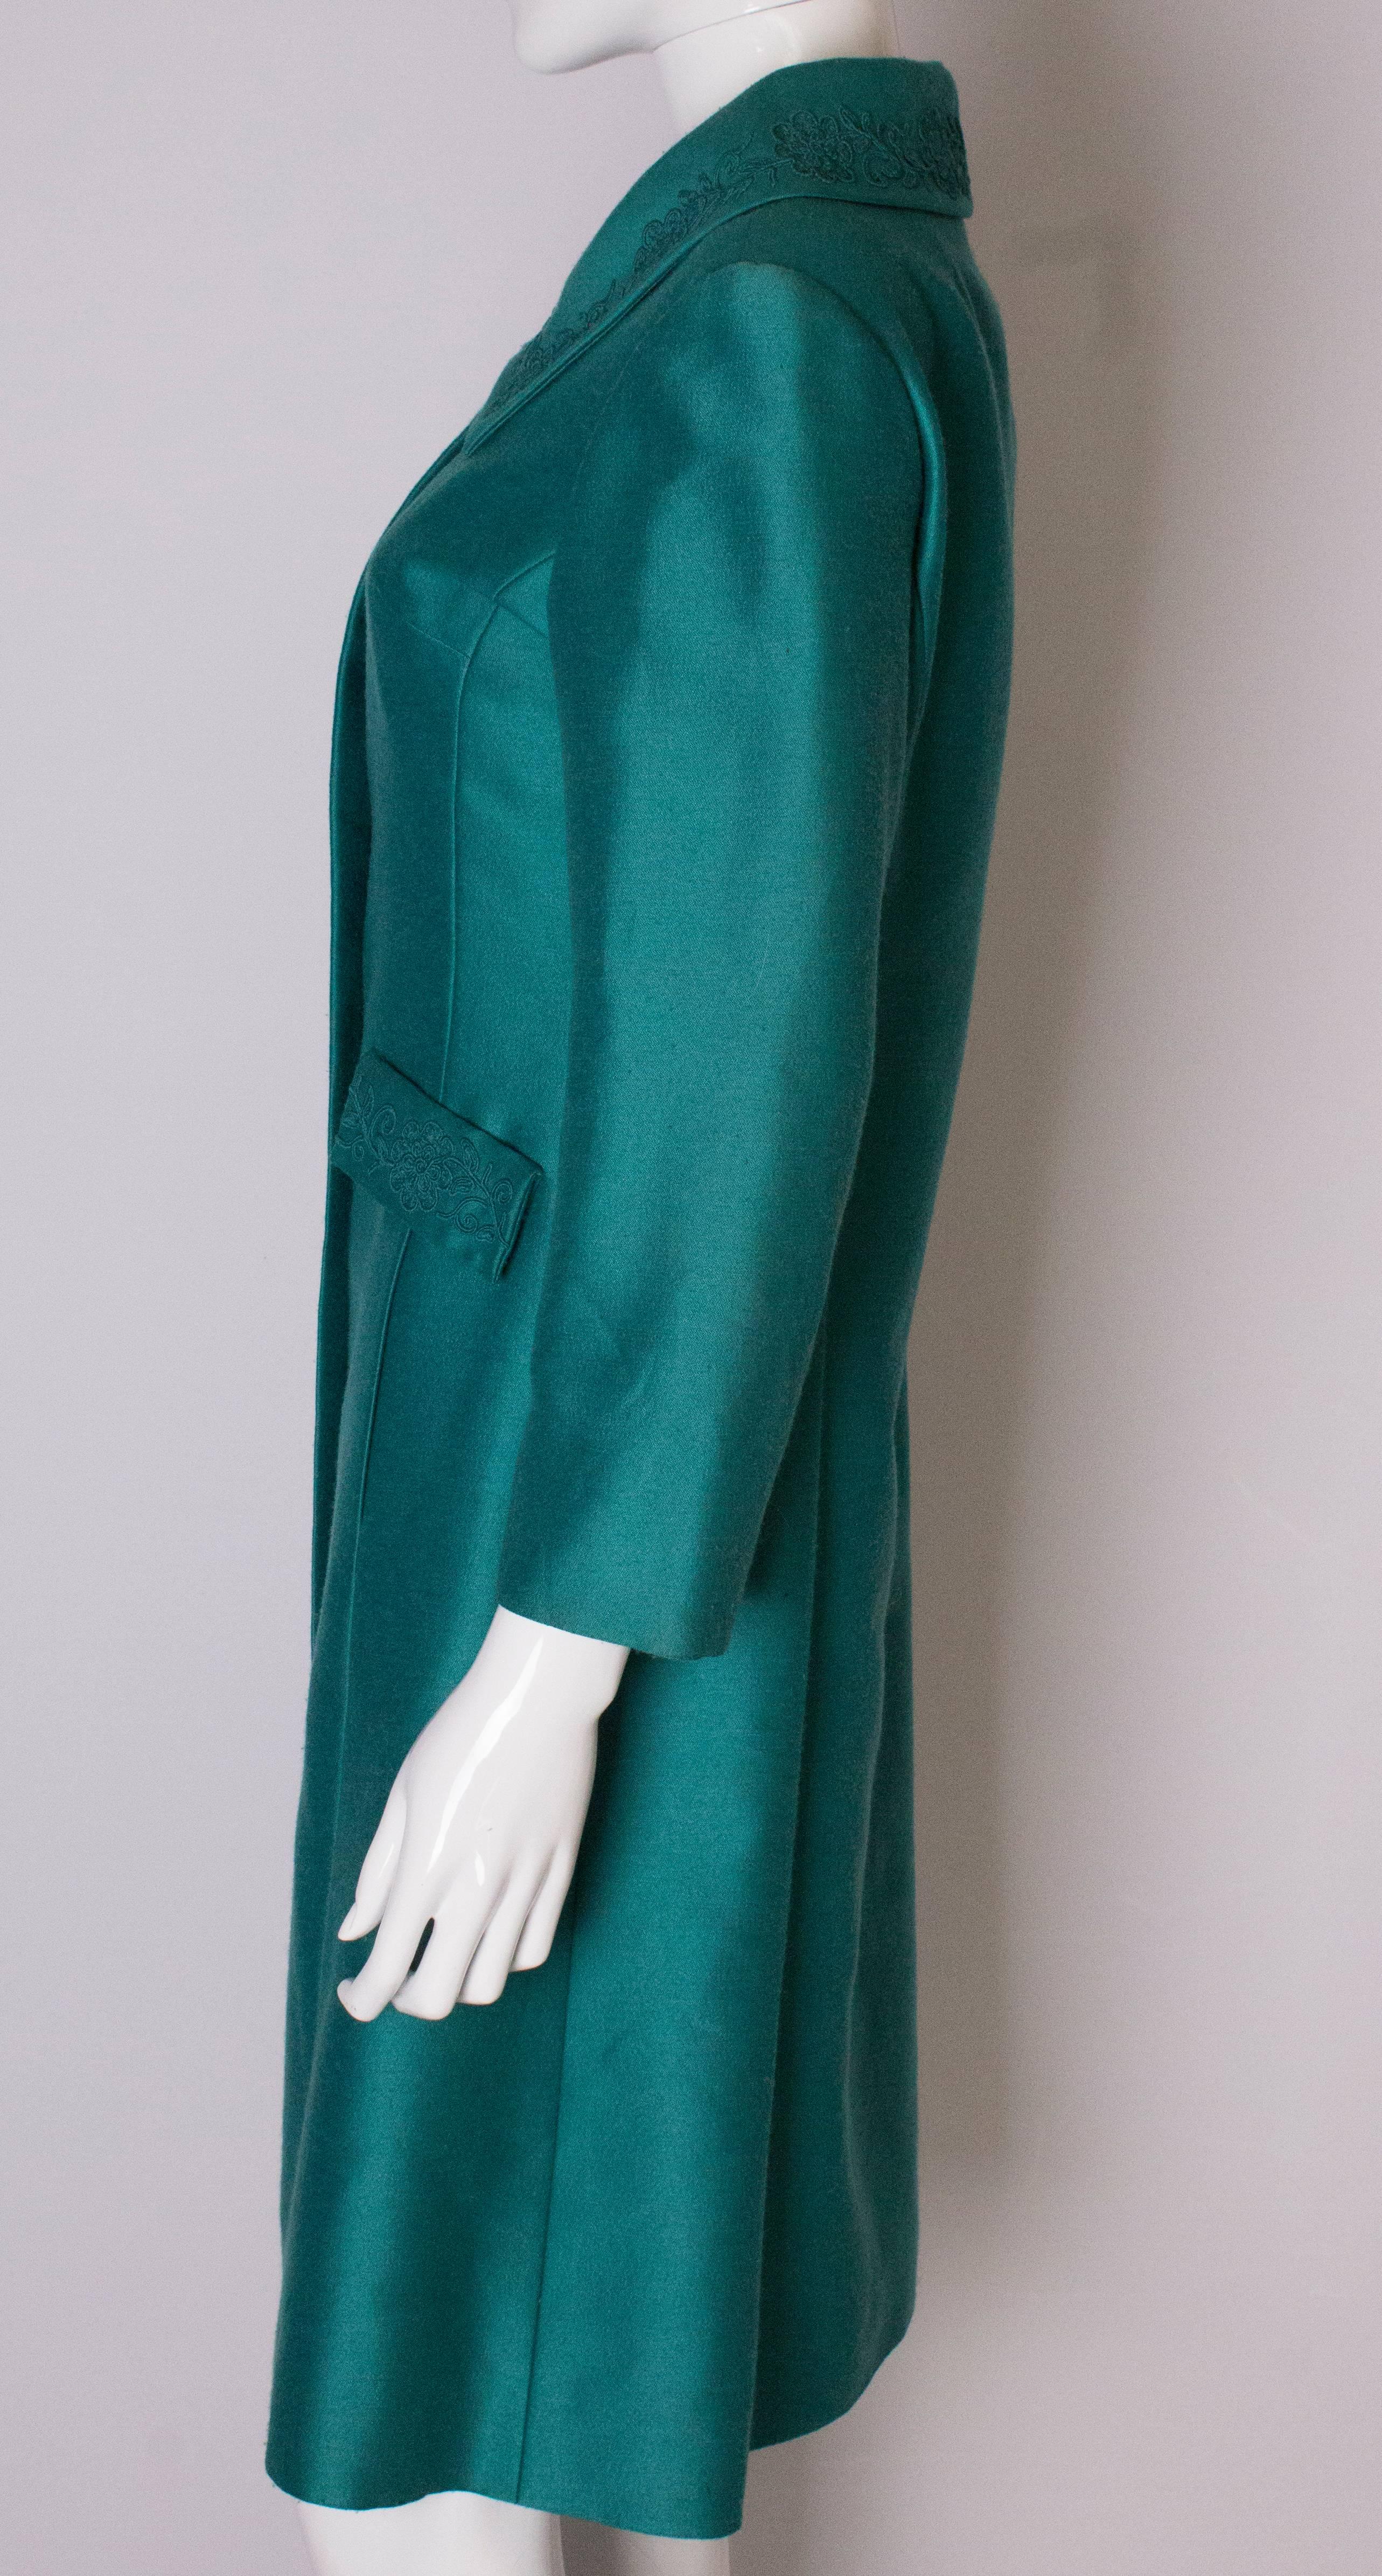 Women's A Vintage 1960s Teal Coloured dress coat /evening jacket